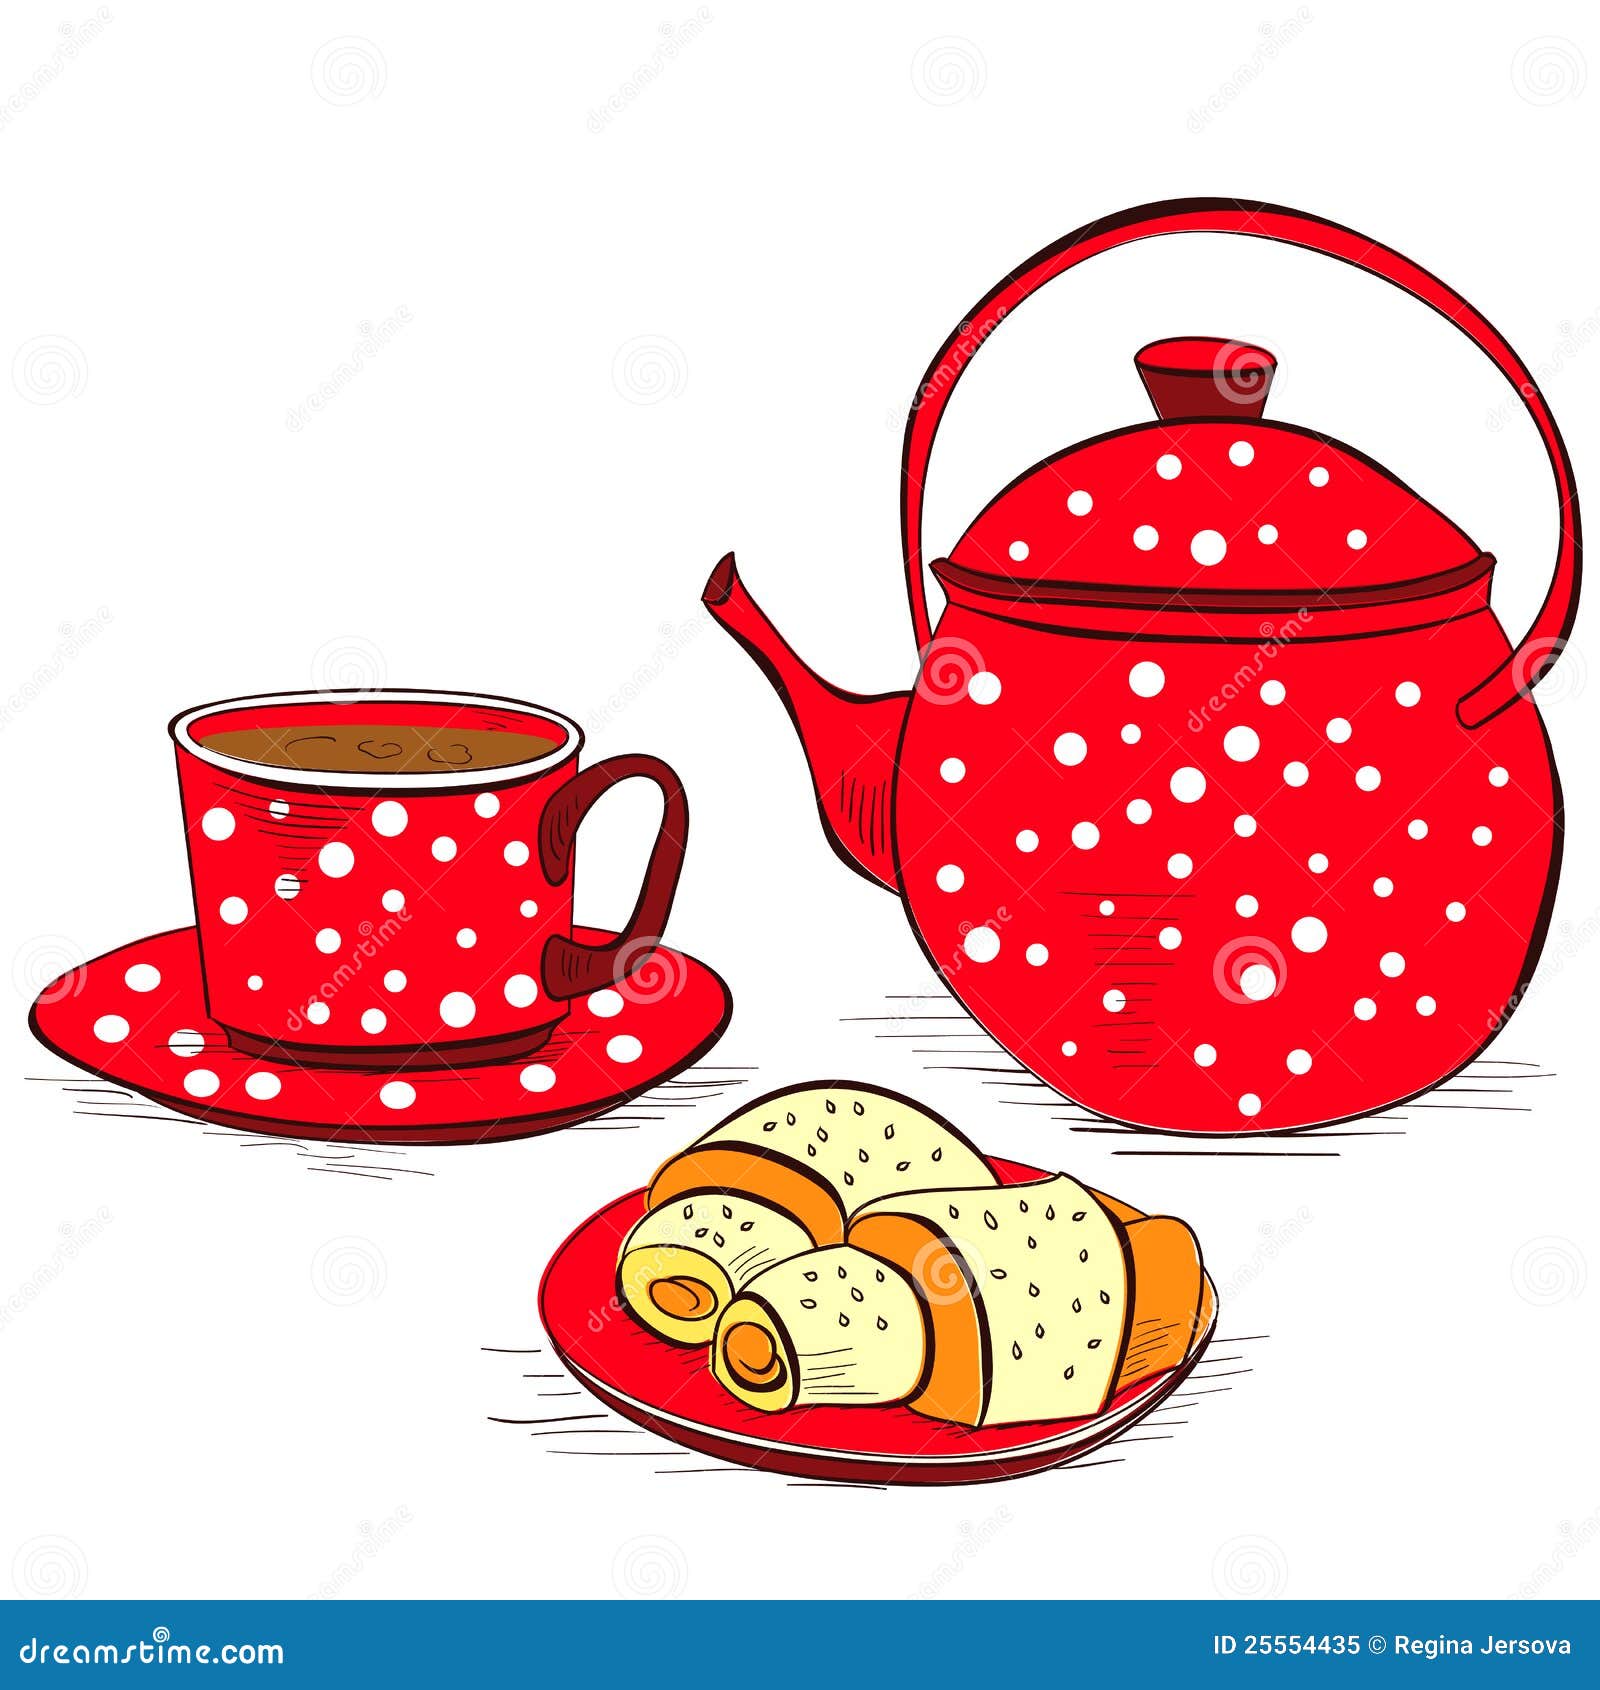 Tea With Buns Stock Vector. Illustration Of Breakfast - 25554435